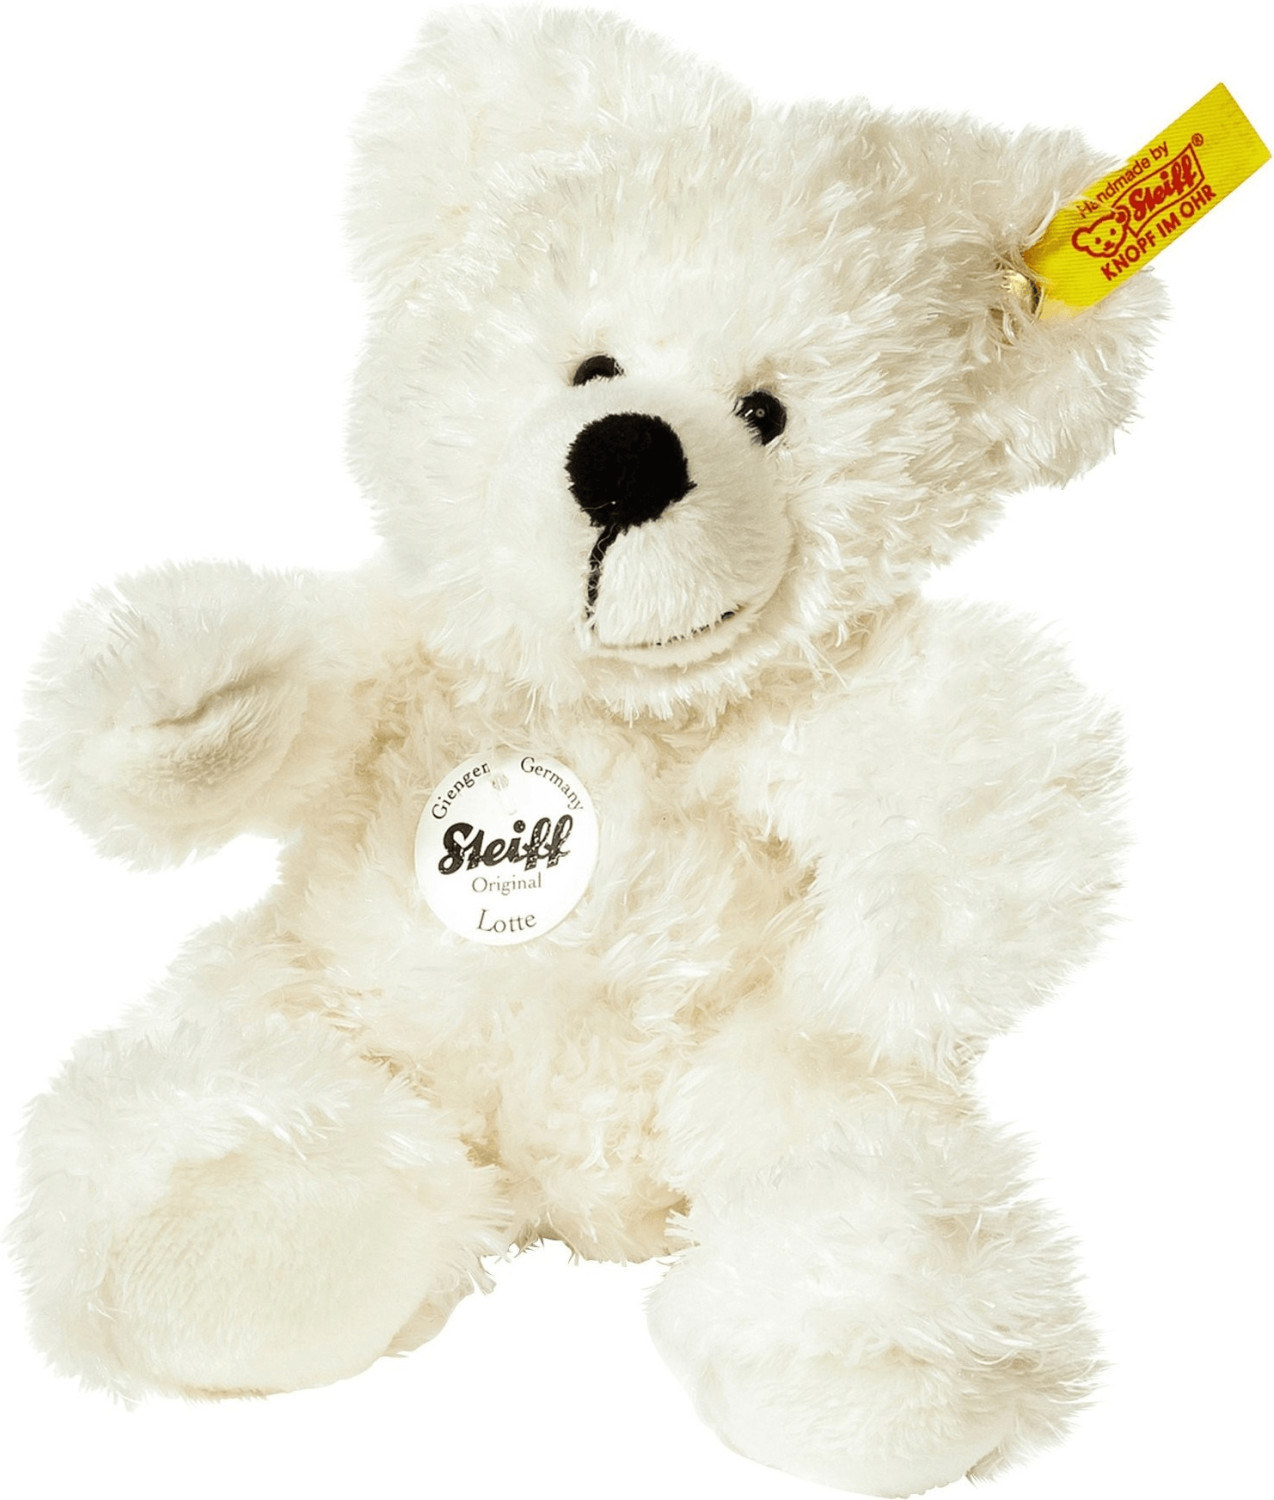 Steiff Lotte Teddy bear 18 cm